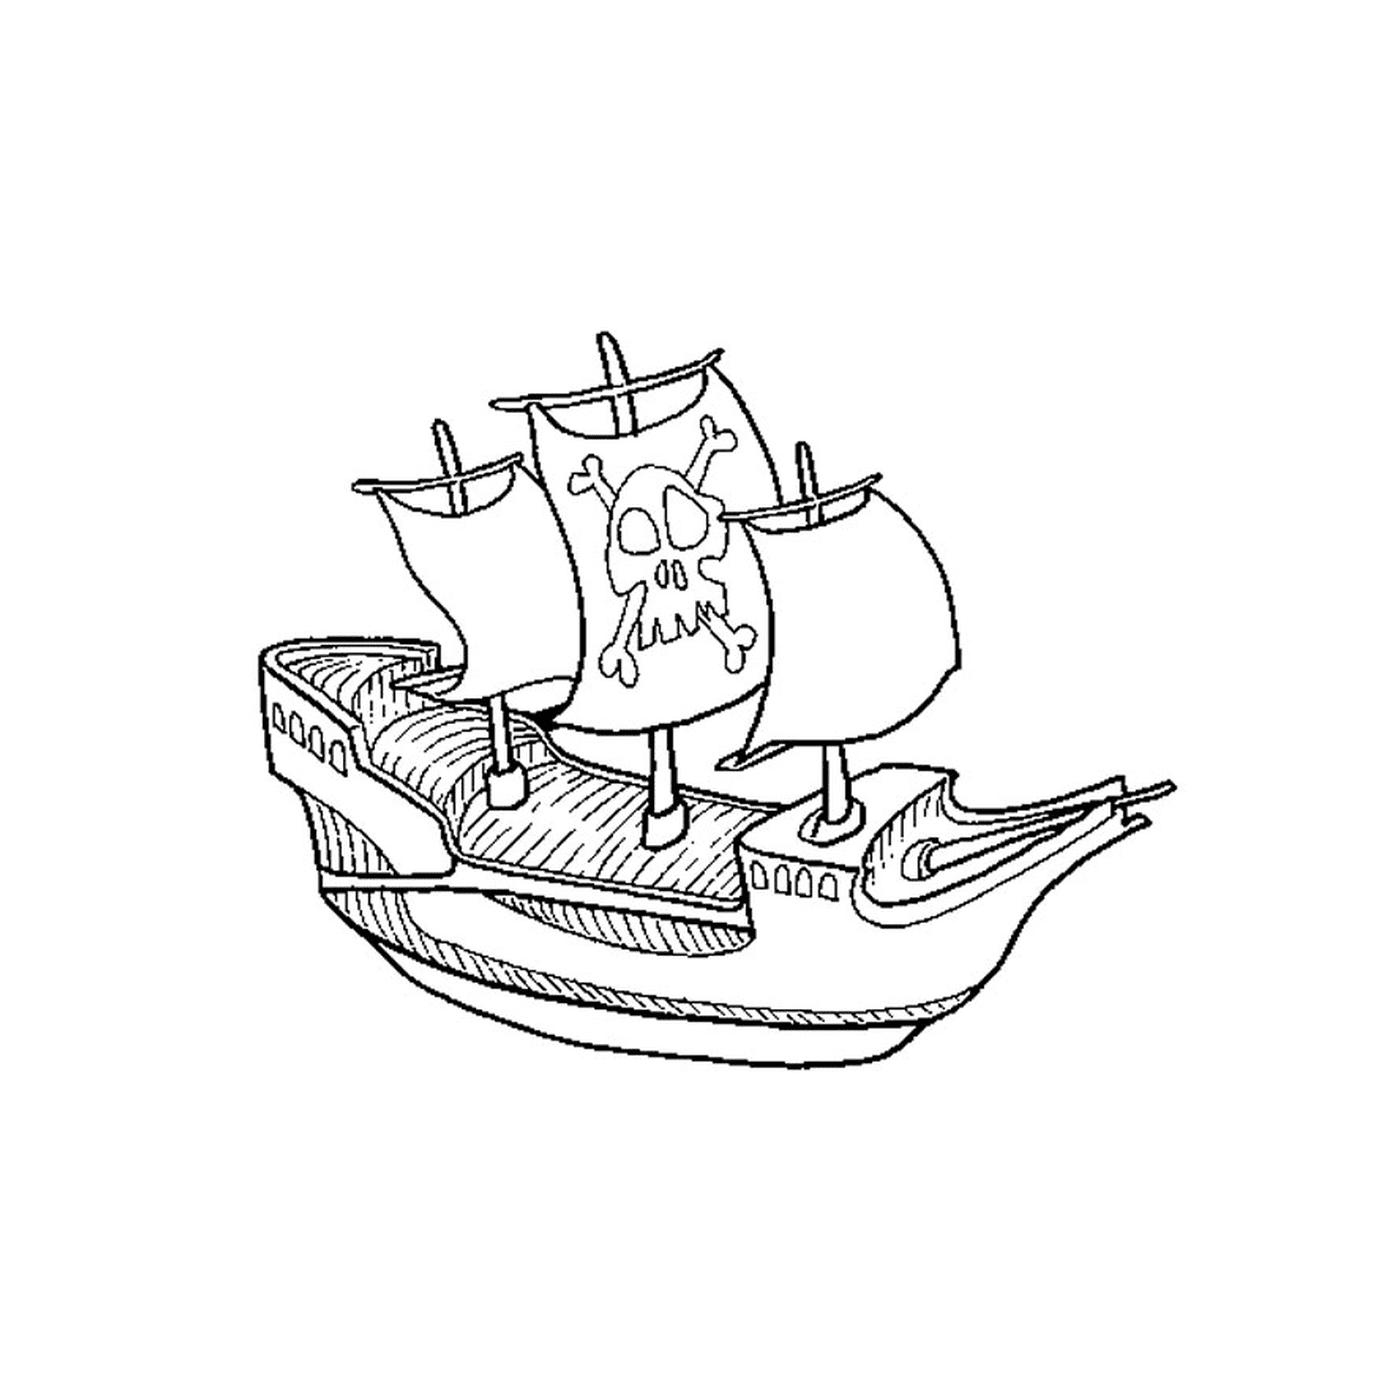  Un barco pirata con cabeza de muerte 